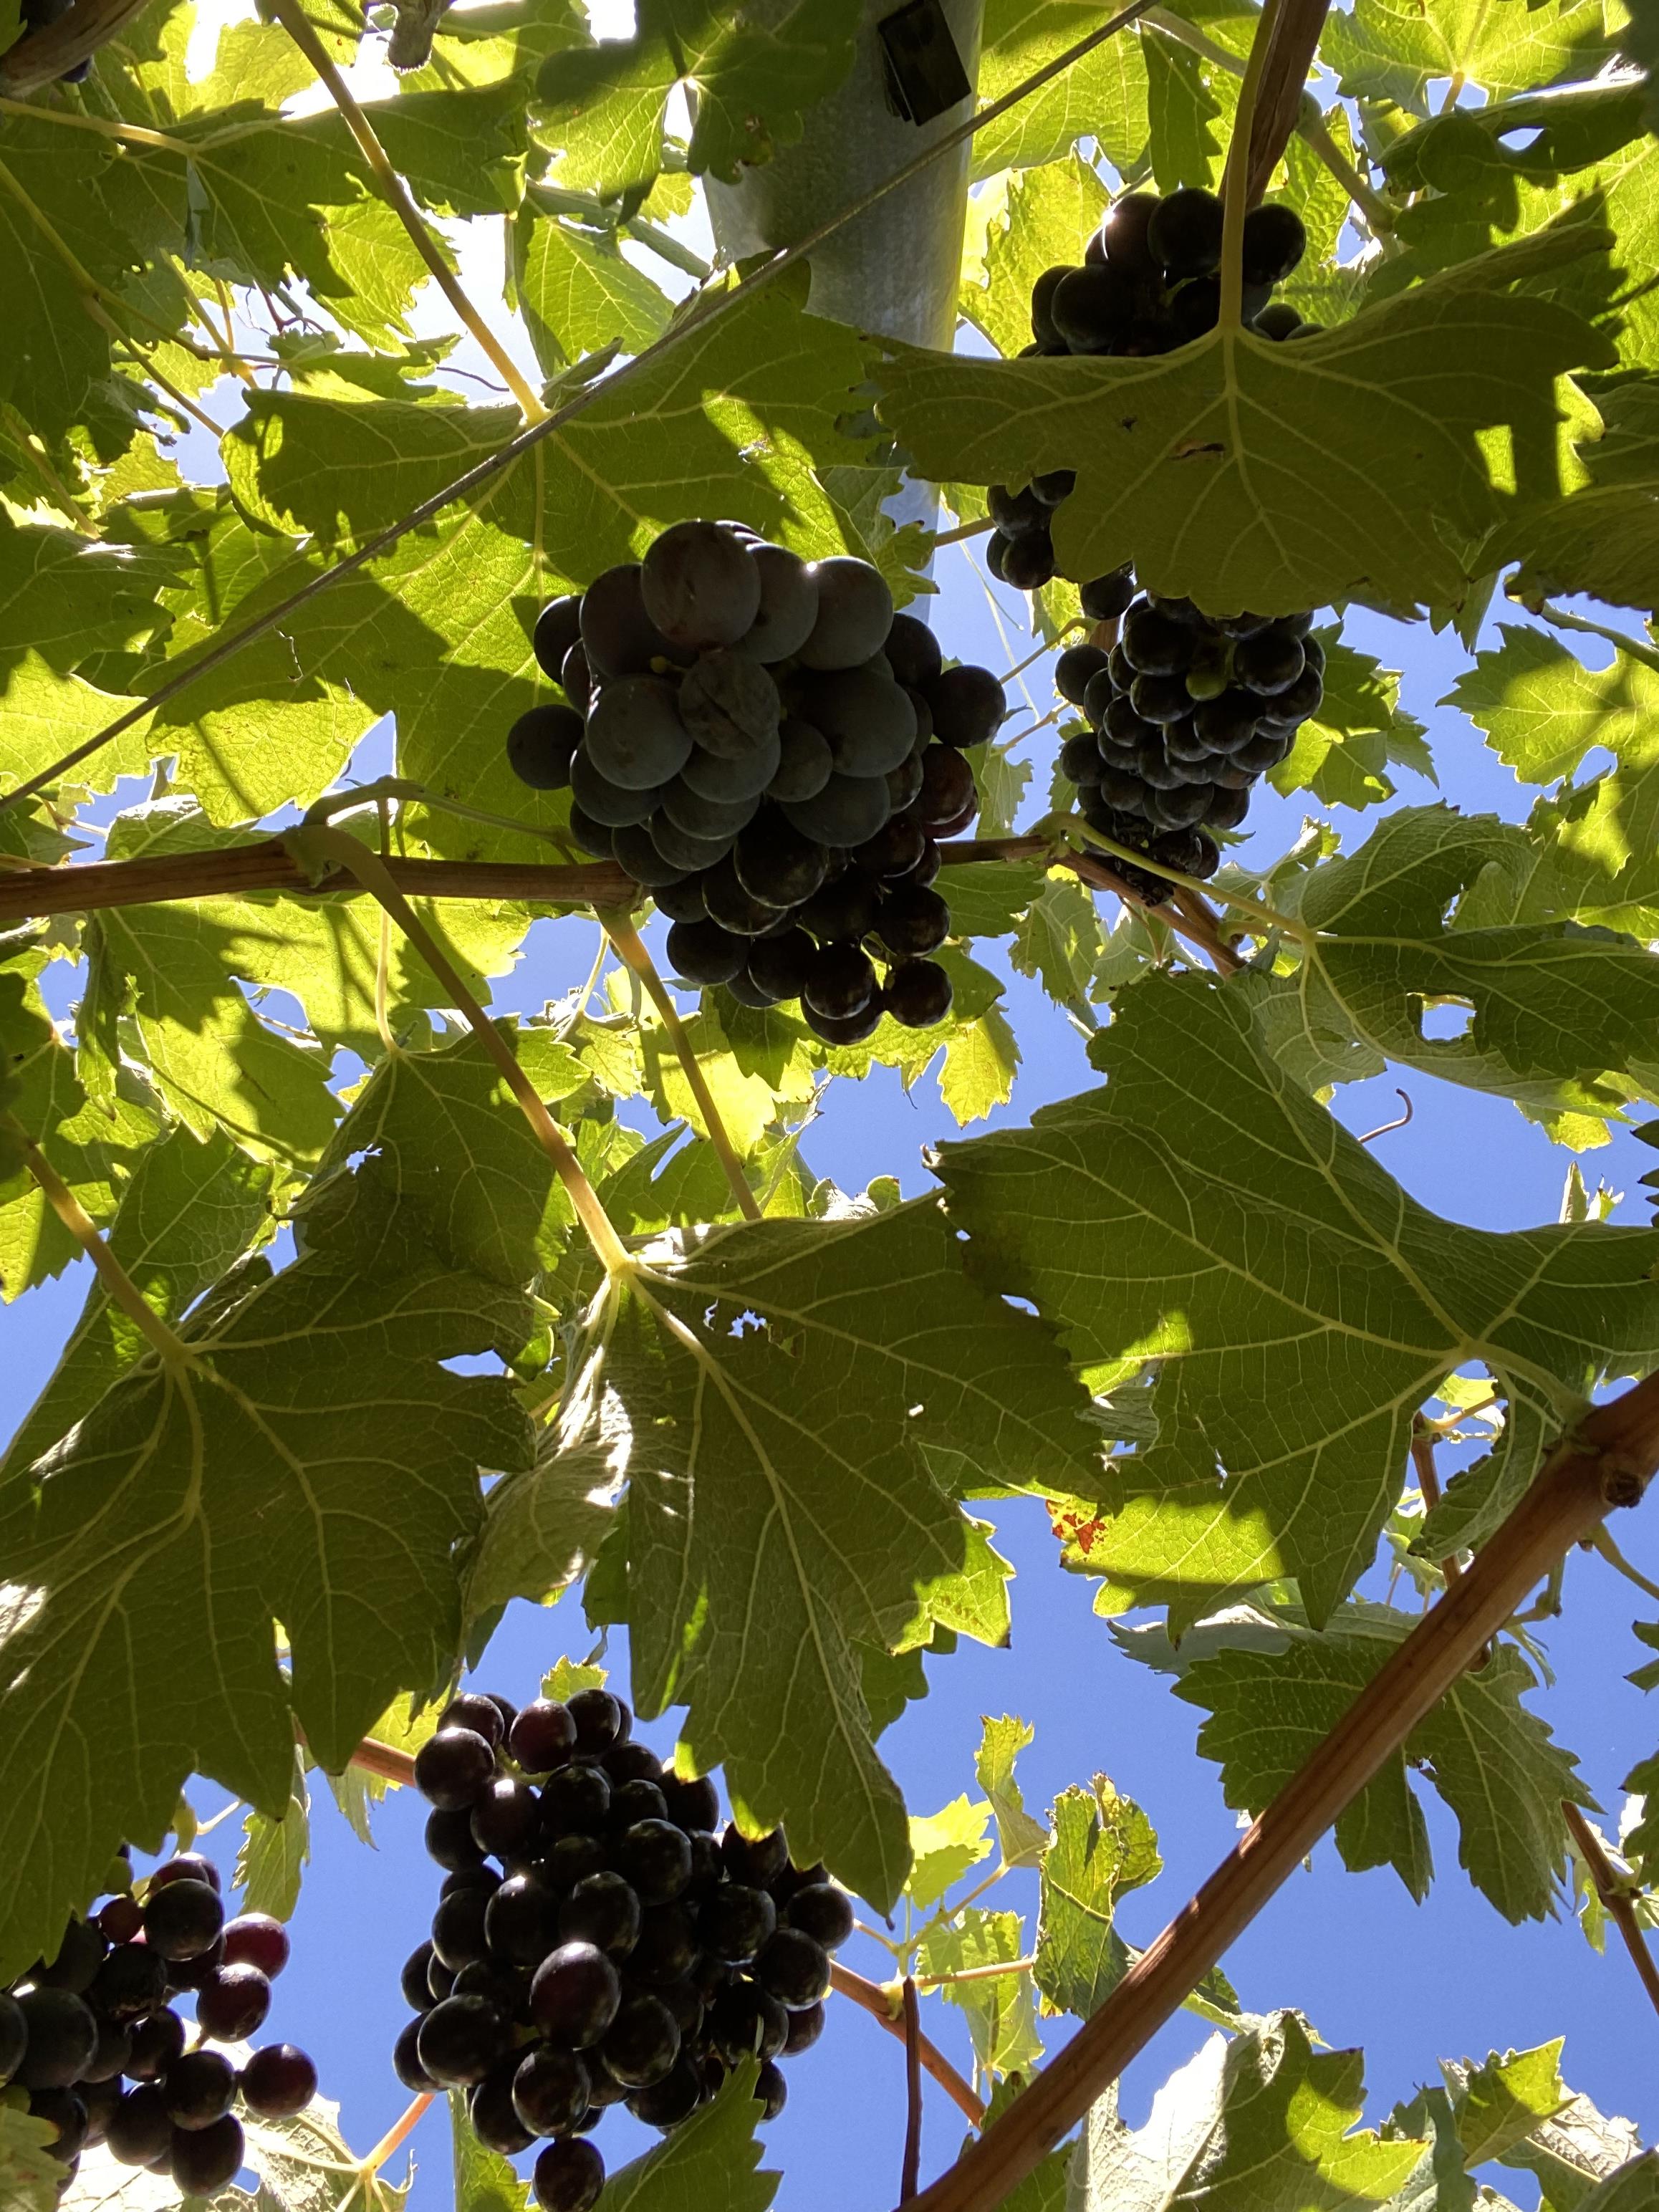 Yarran Wines Grapes below view